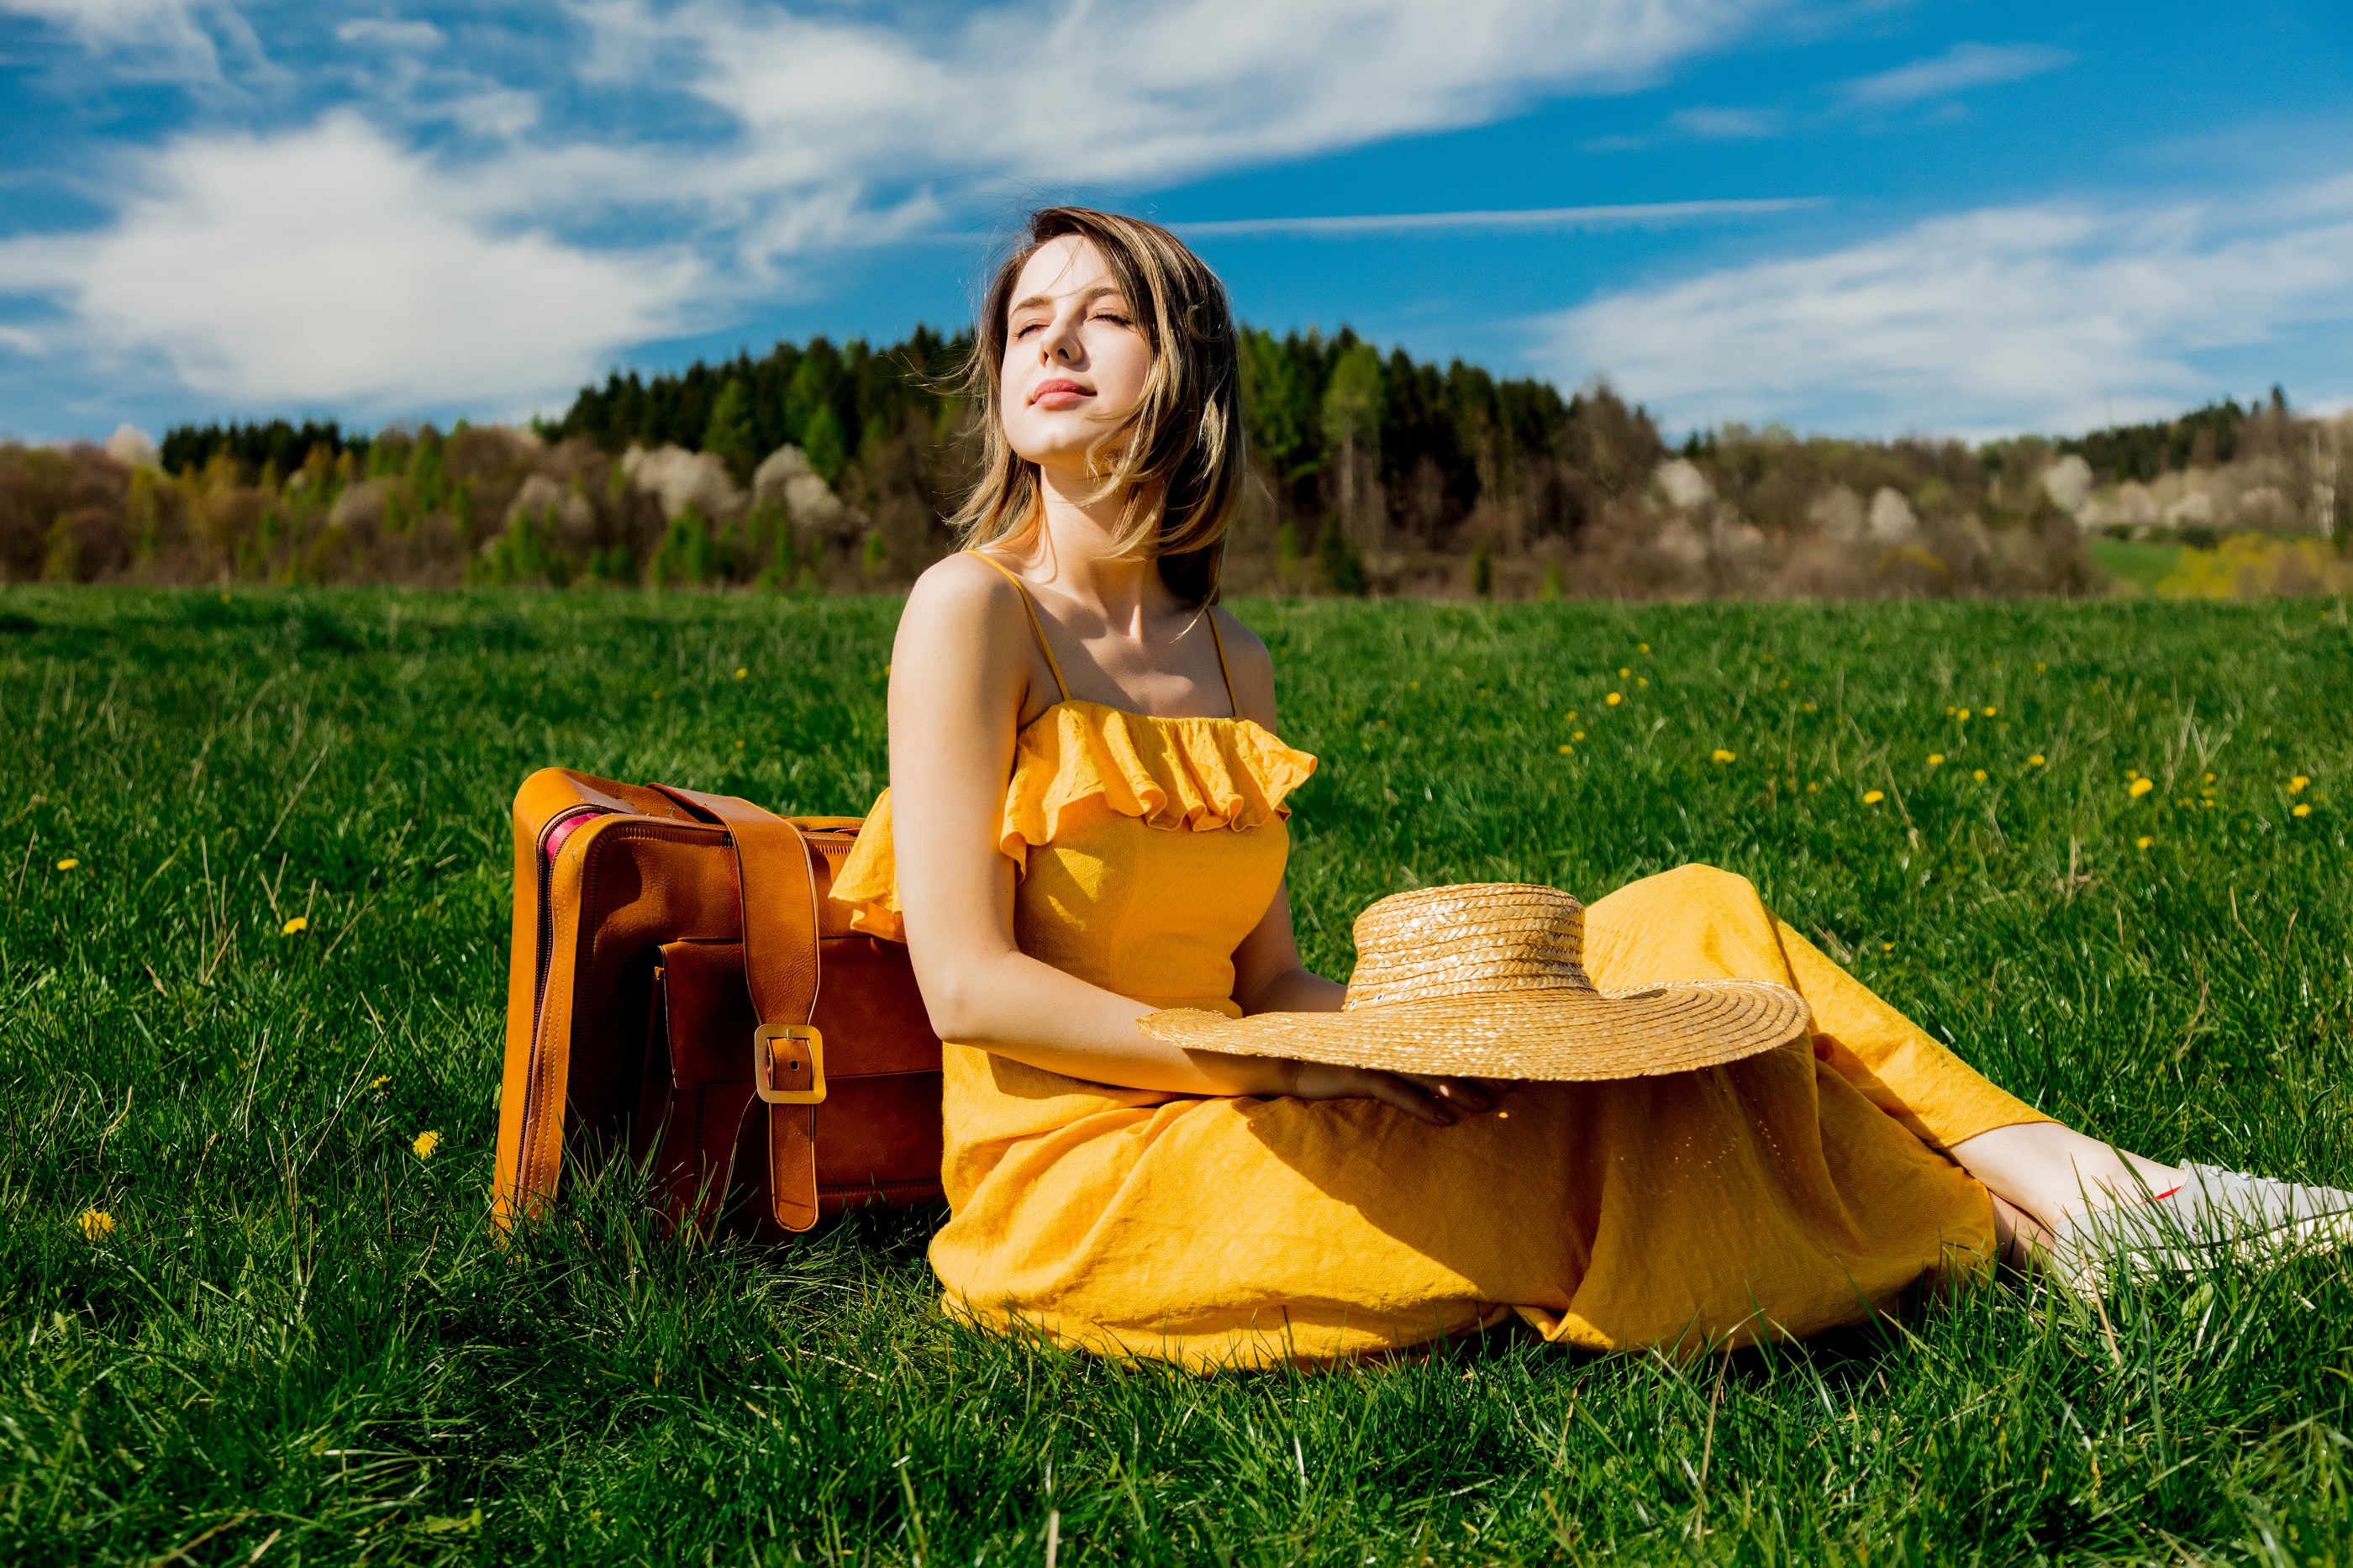 girl-in-yellow-dress-and-suitcase-sitting-on-mount-2022-01-12-00-26-33-utc.jpg